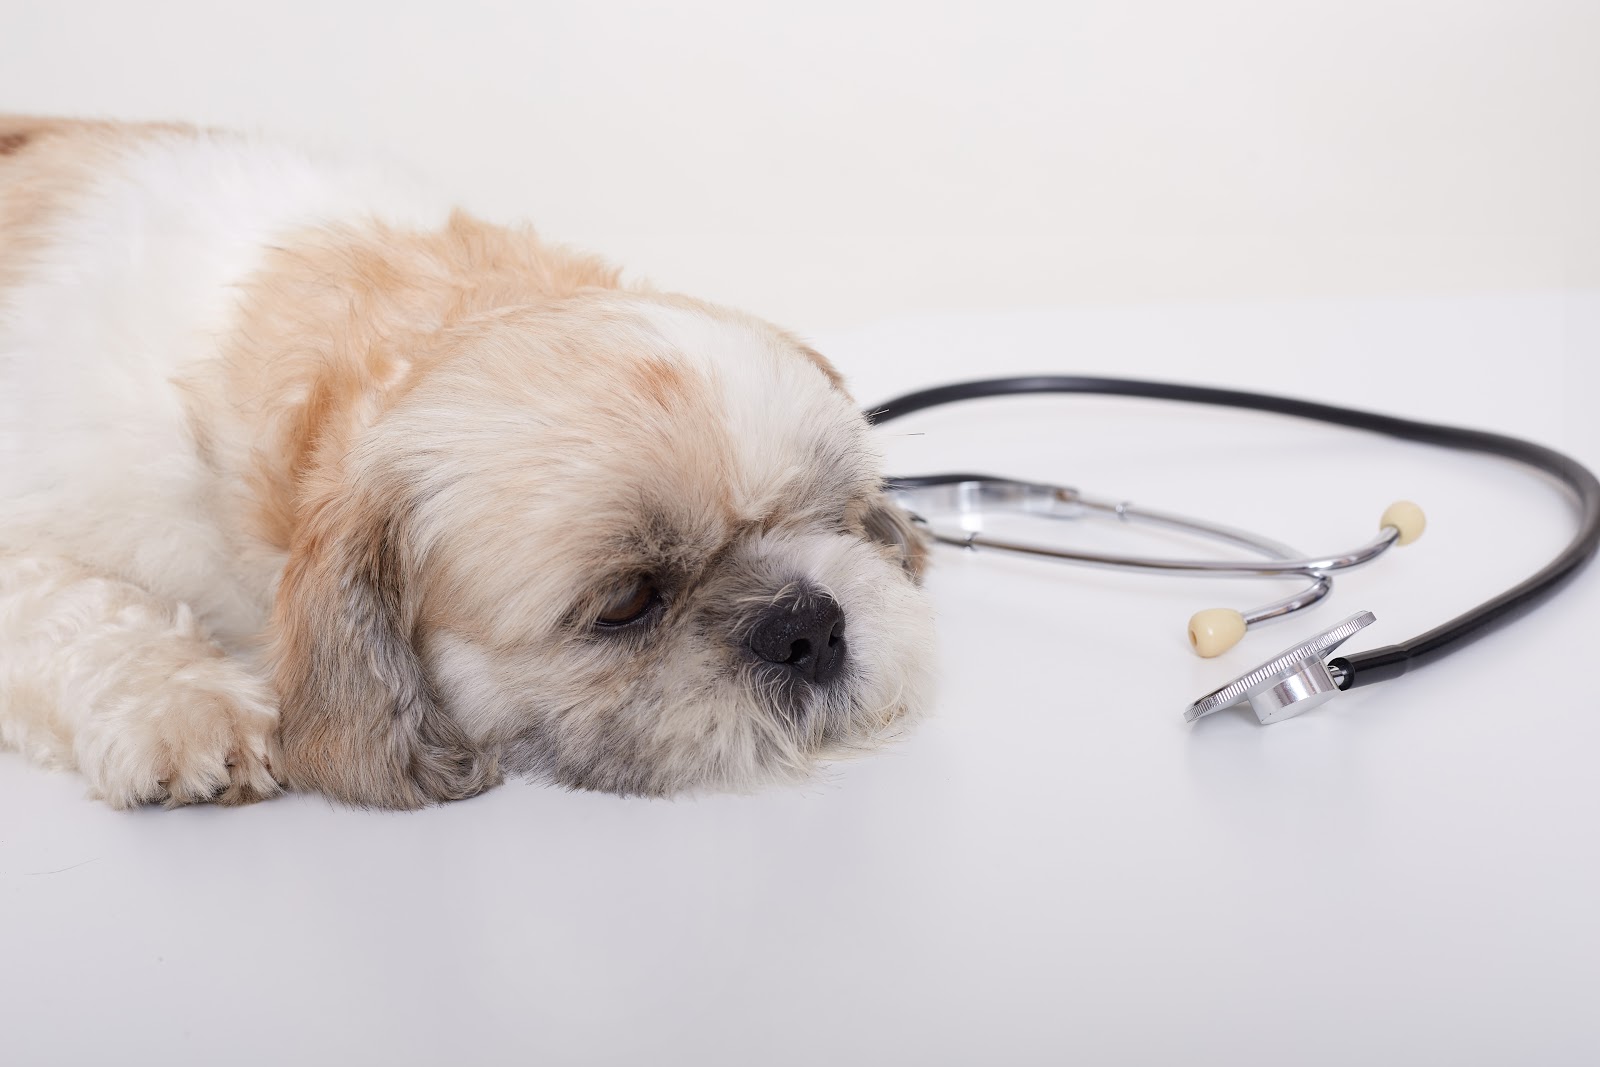 Pet health savings accounts